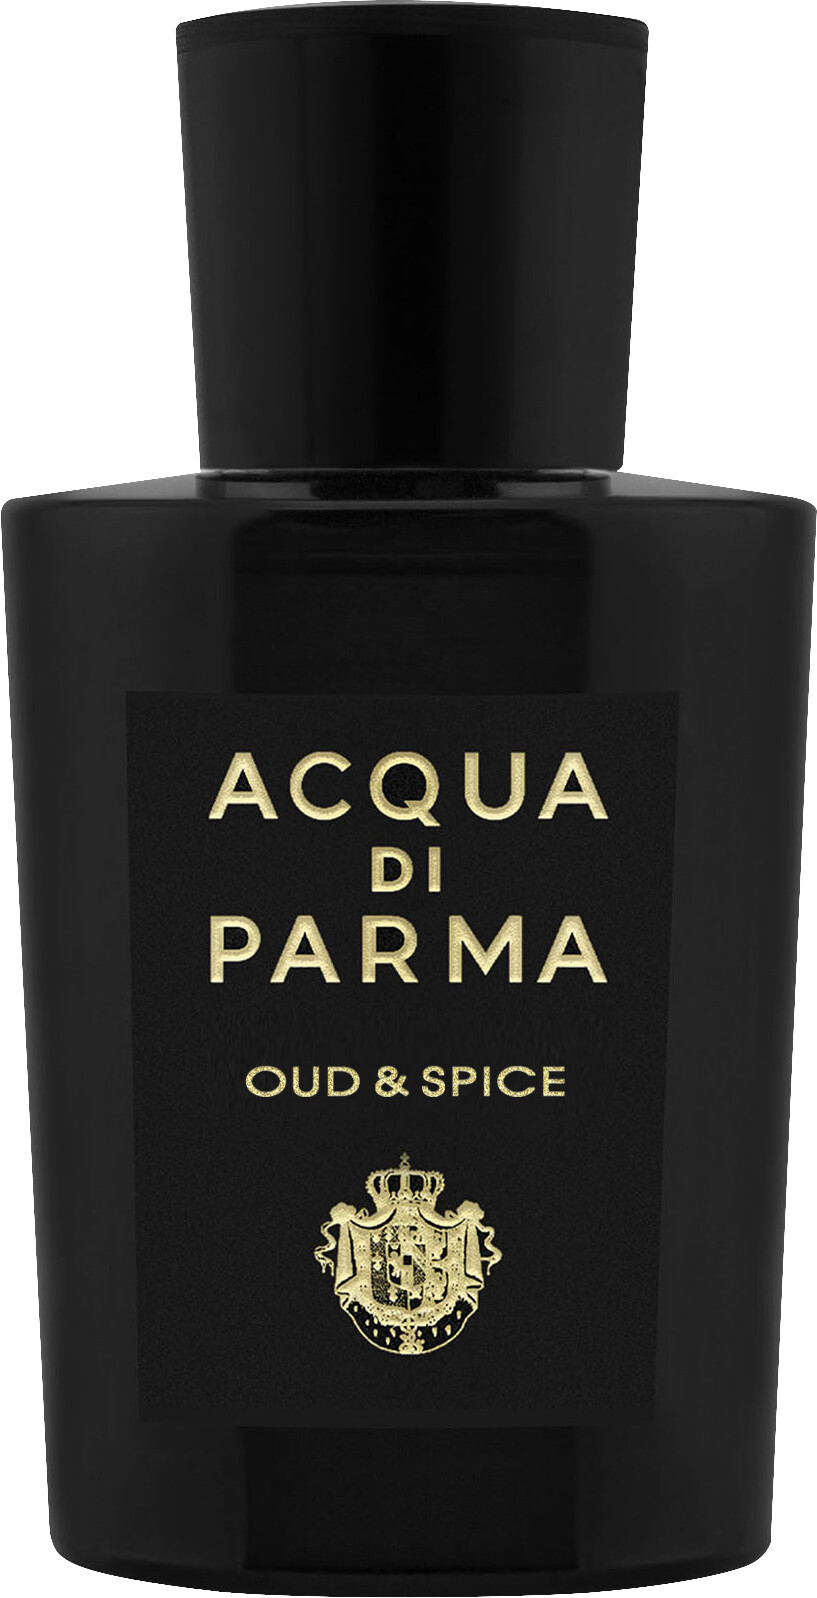 Acqua di Parma Oud & Spice Eau de Parfum Spray 100ml